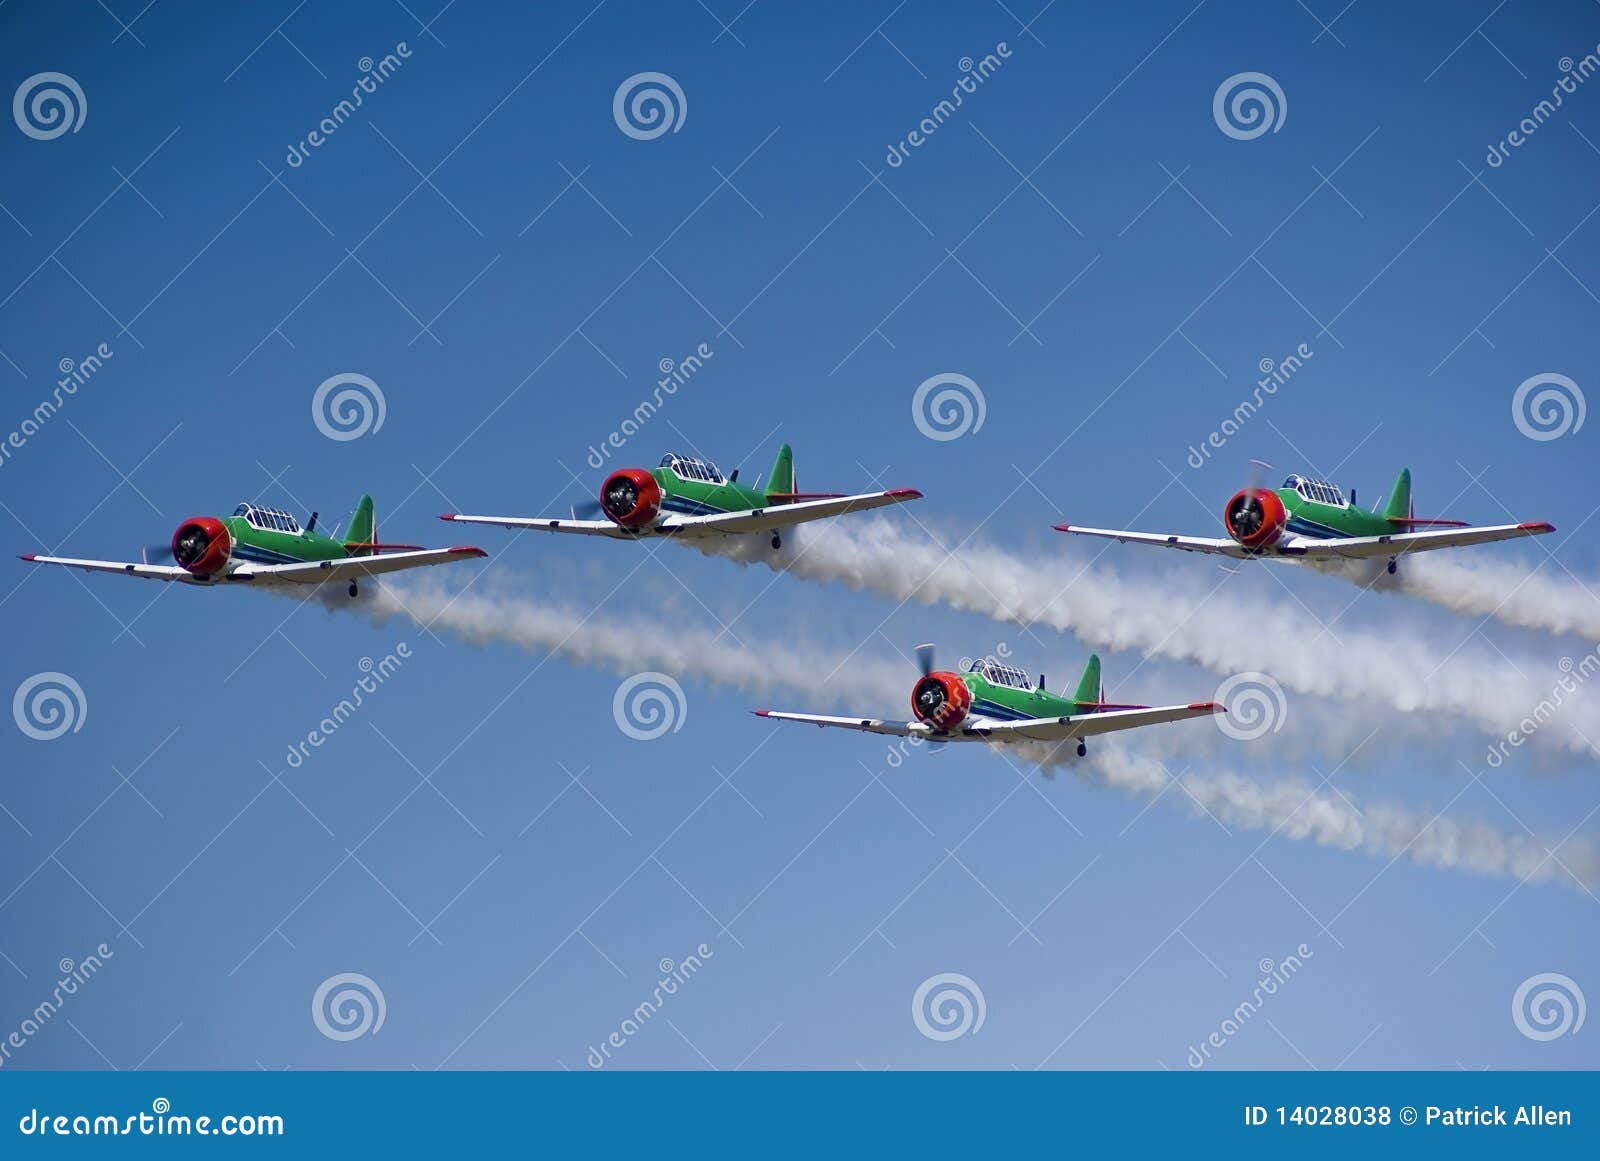 harvard aerobatic team - low level flyby